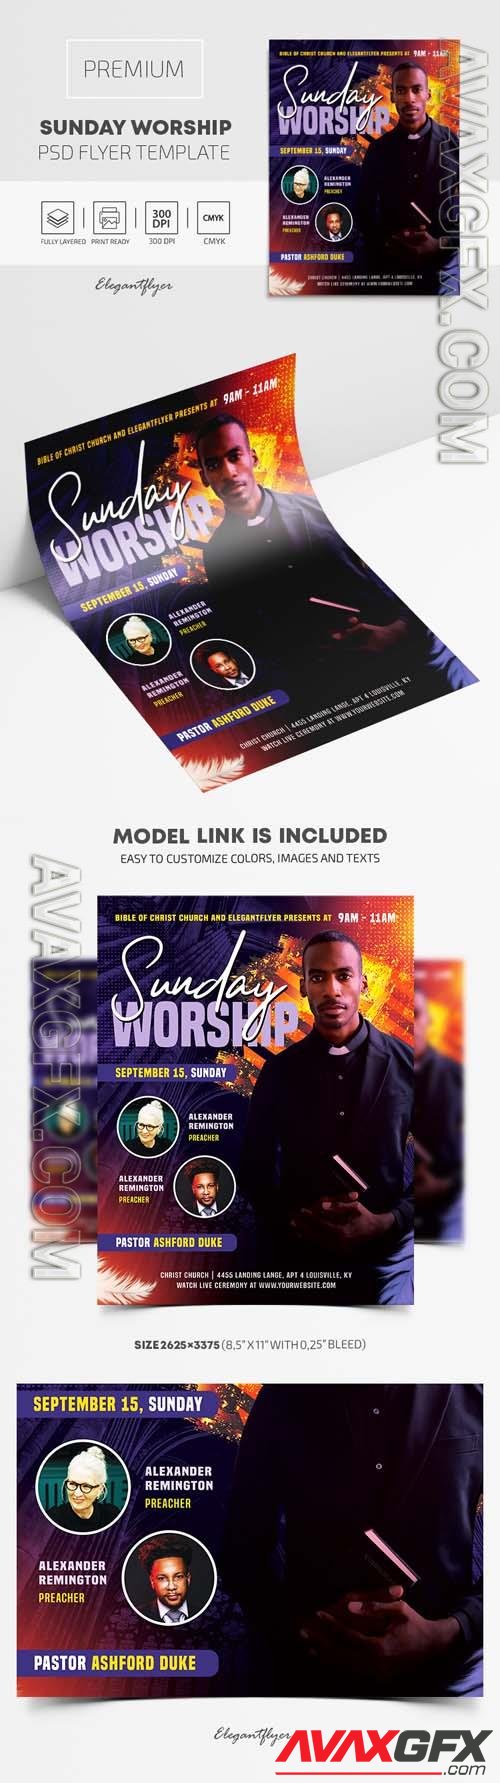 Sunday Worship Premium PSD Flyer Template